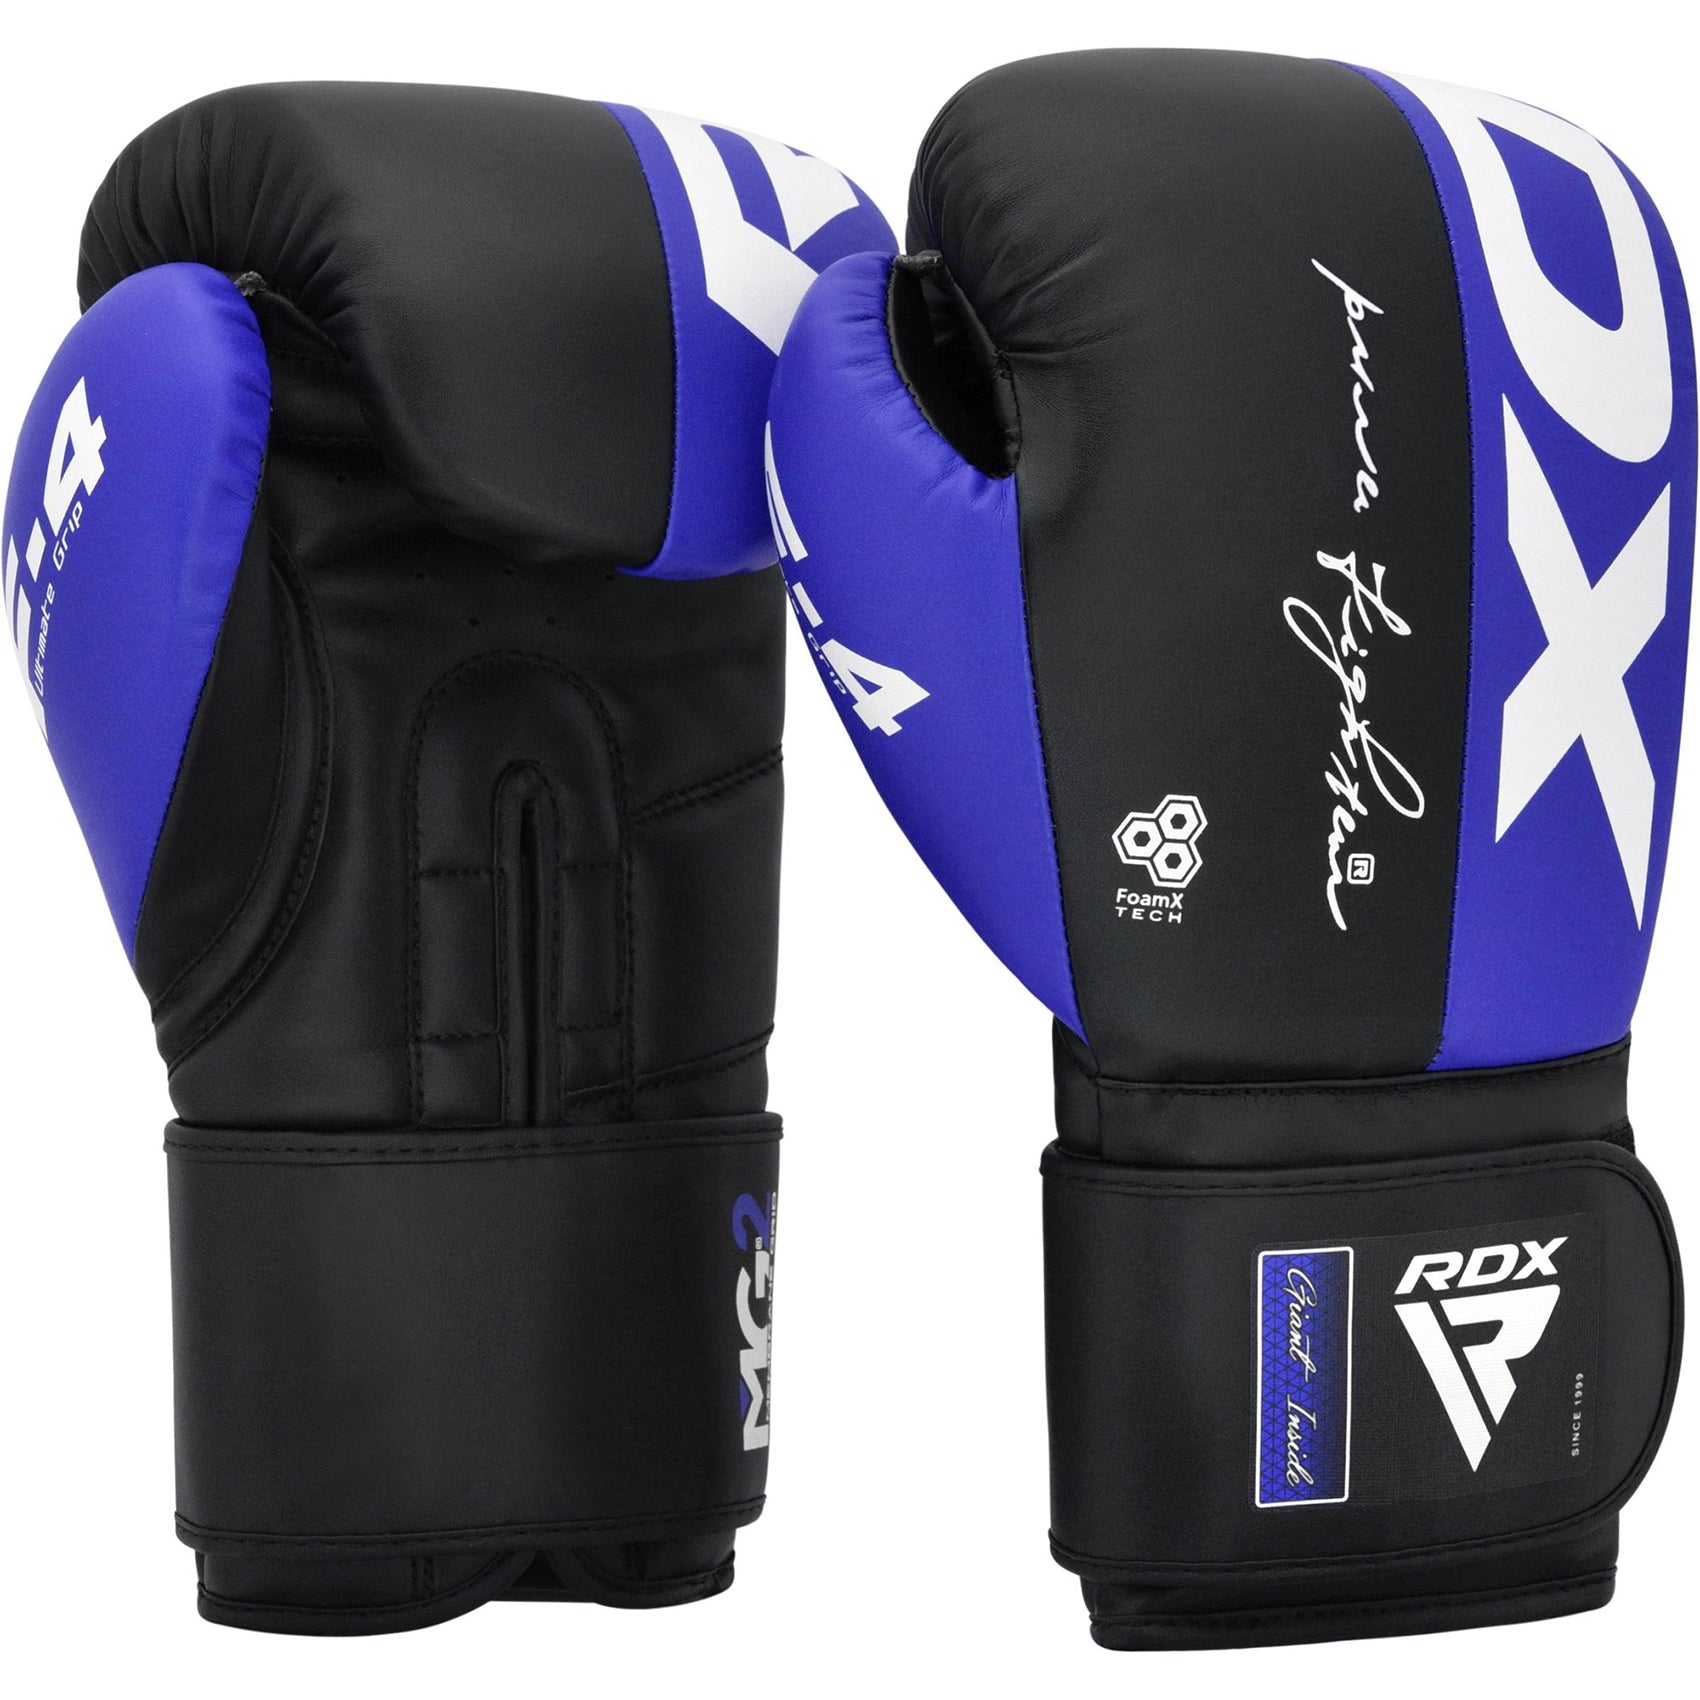 RDX REX F4 MMA, BJJ, Muay Thai, Kickboxing, Training Boxing Gloves - BLUE/BLACK - 12oz - Pro-Distributing